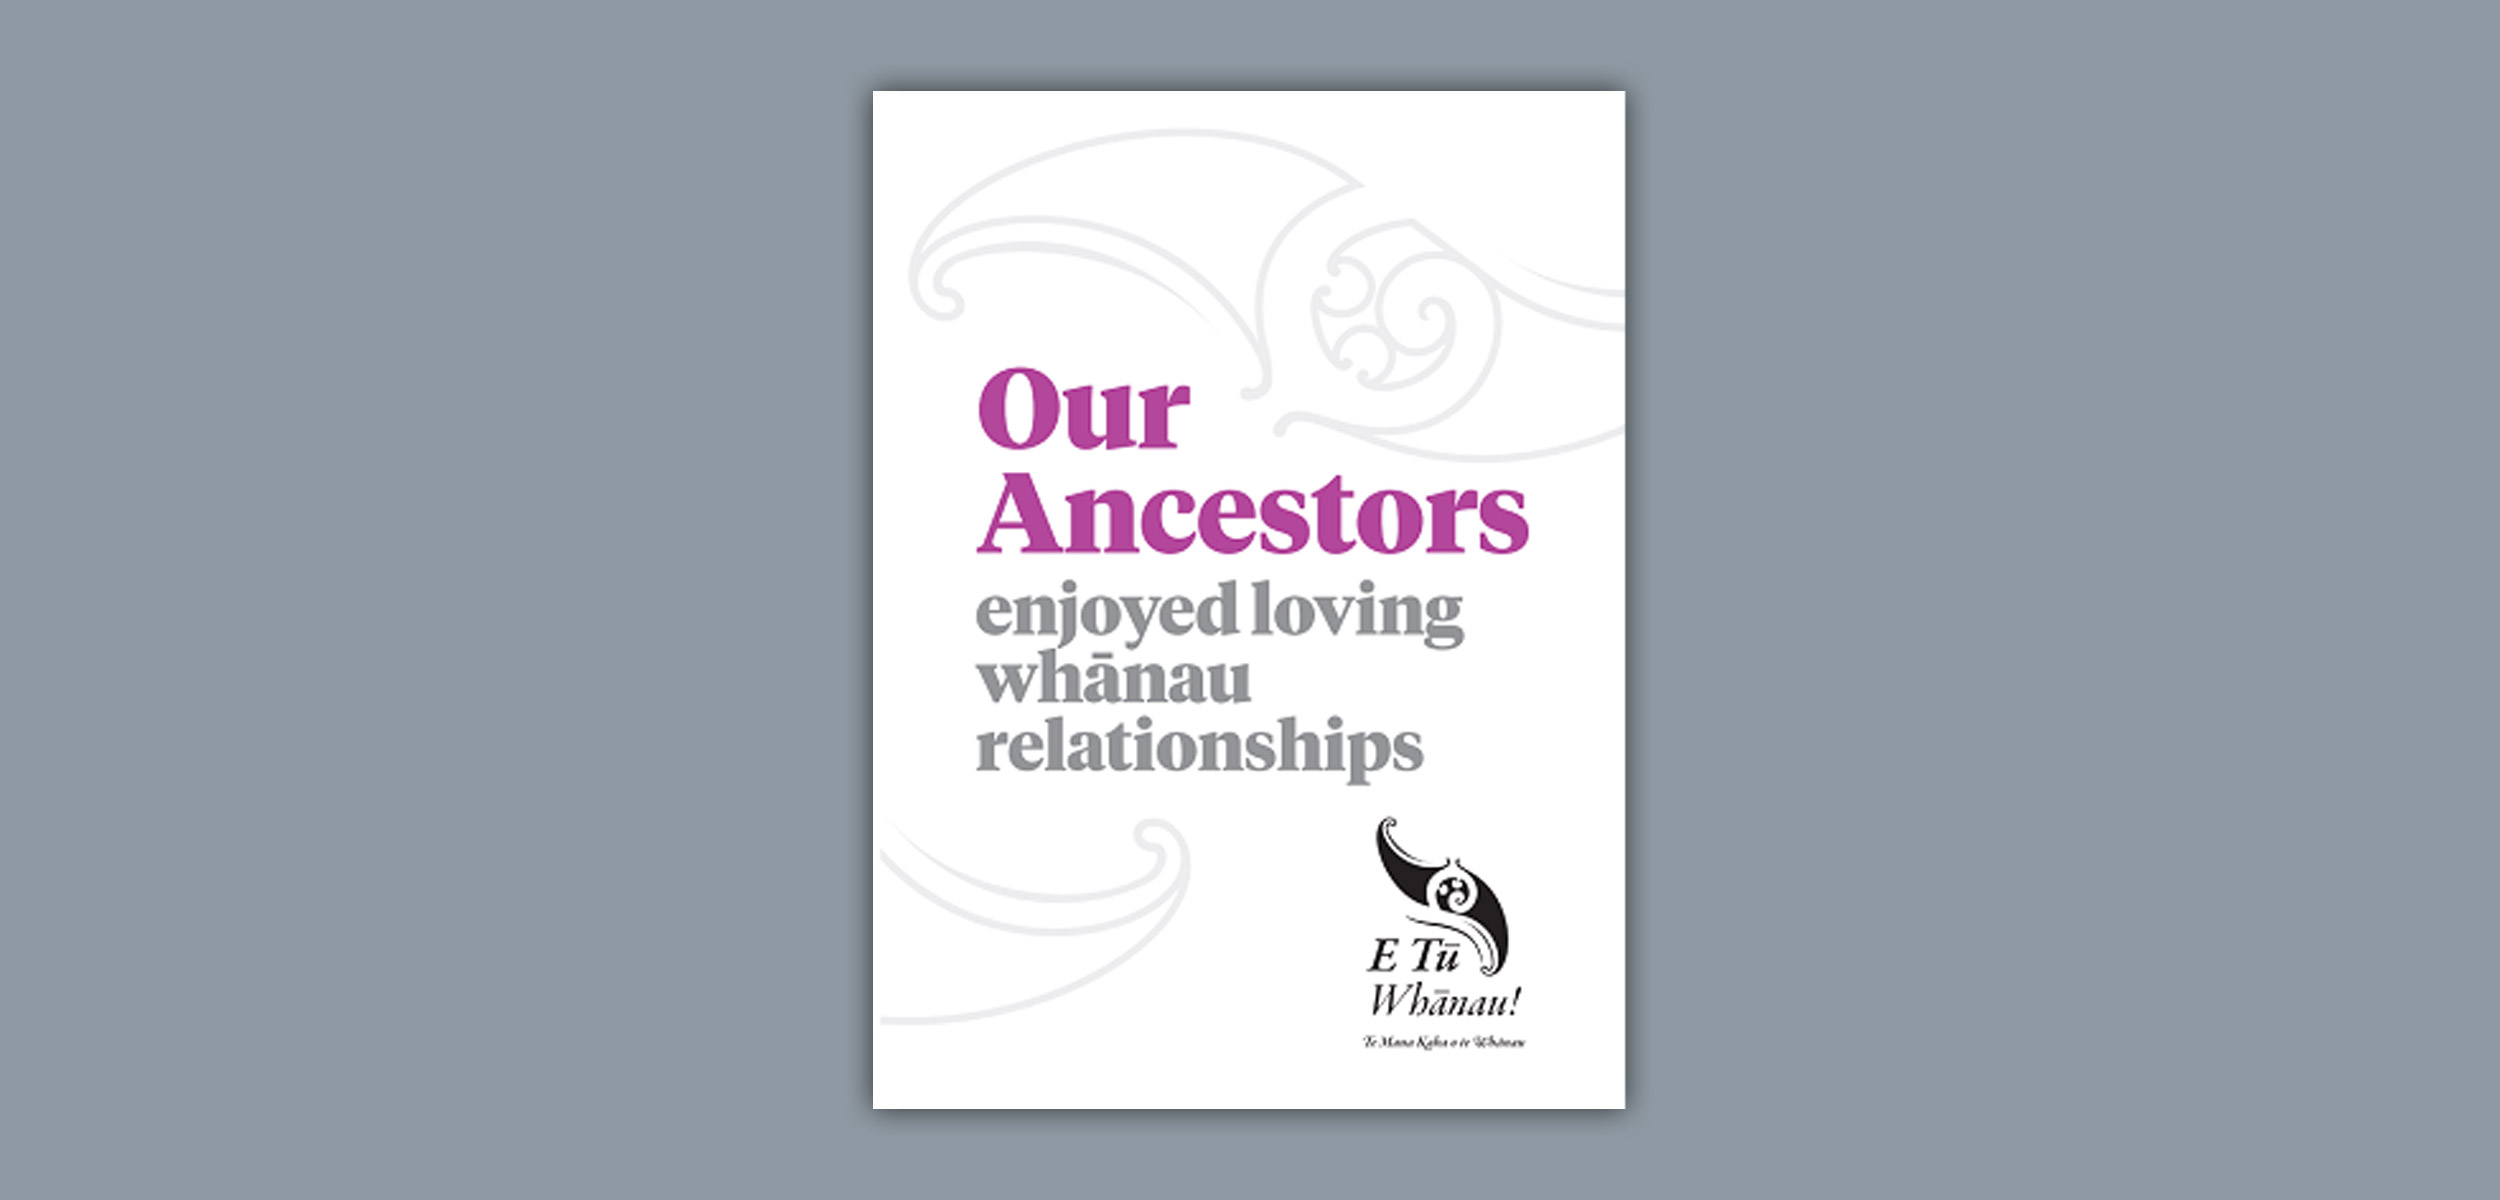 E Tū Whānau – Our Ancestors enjoyed loving whānau relationships